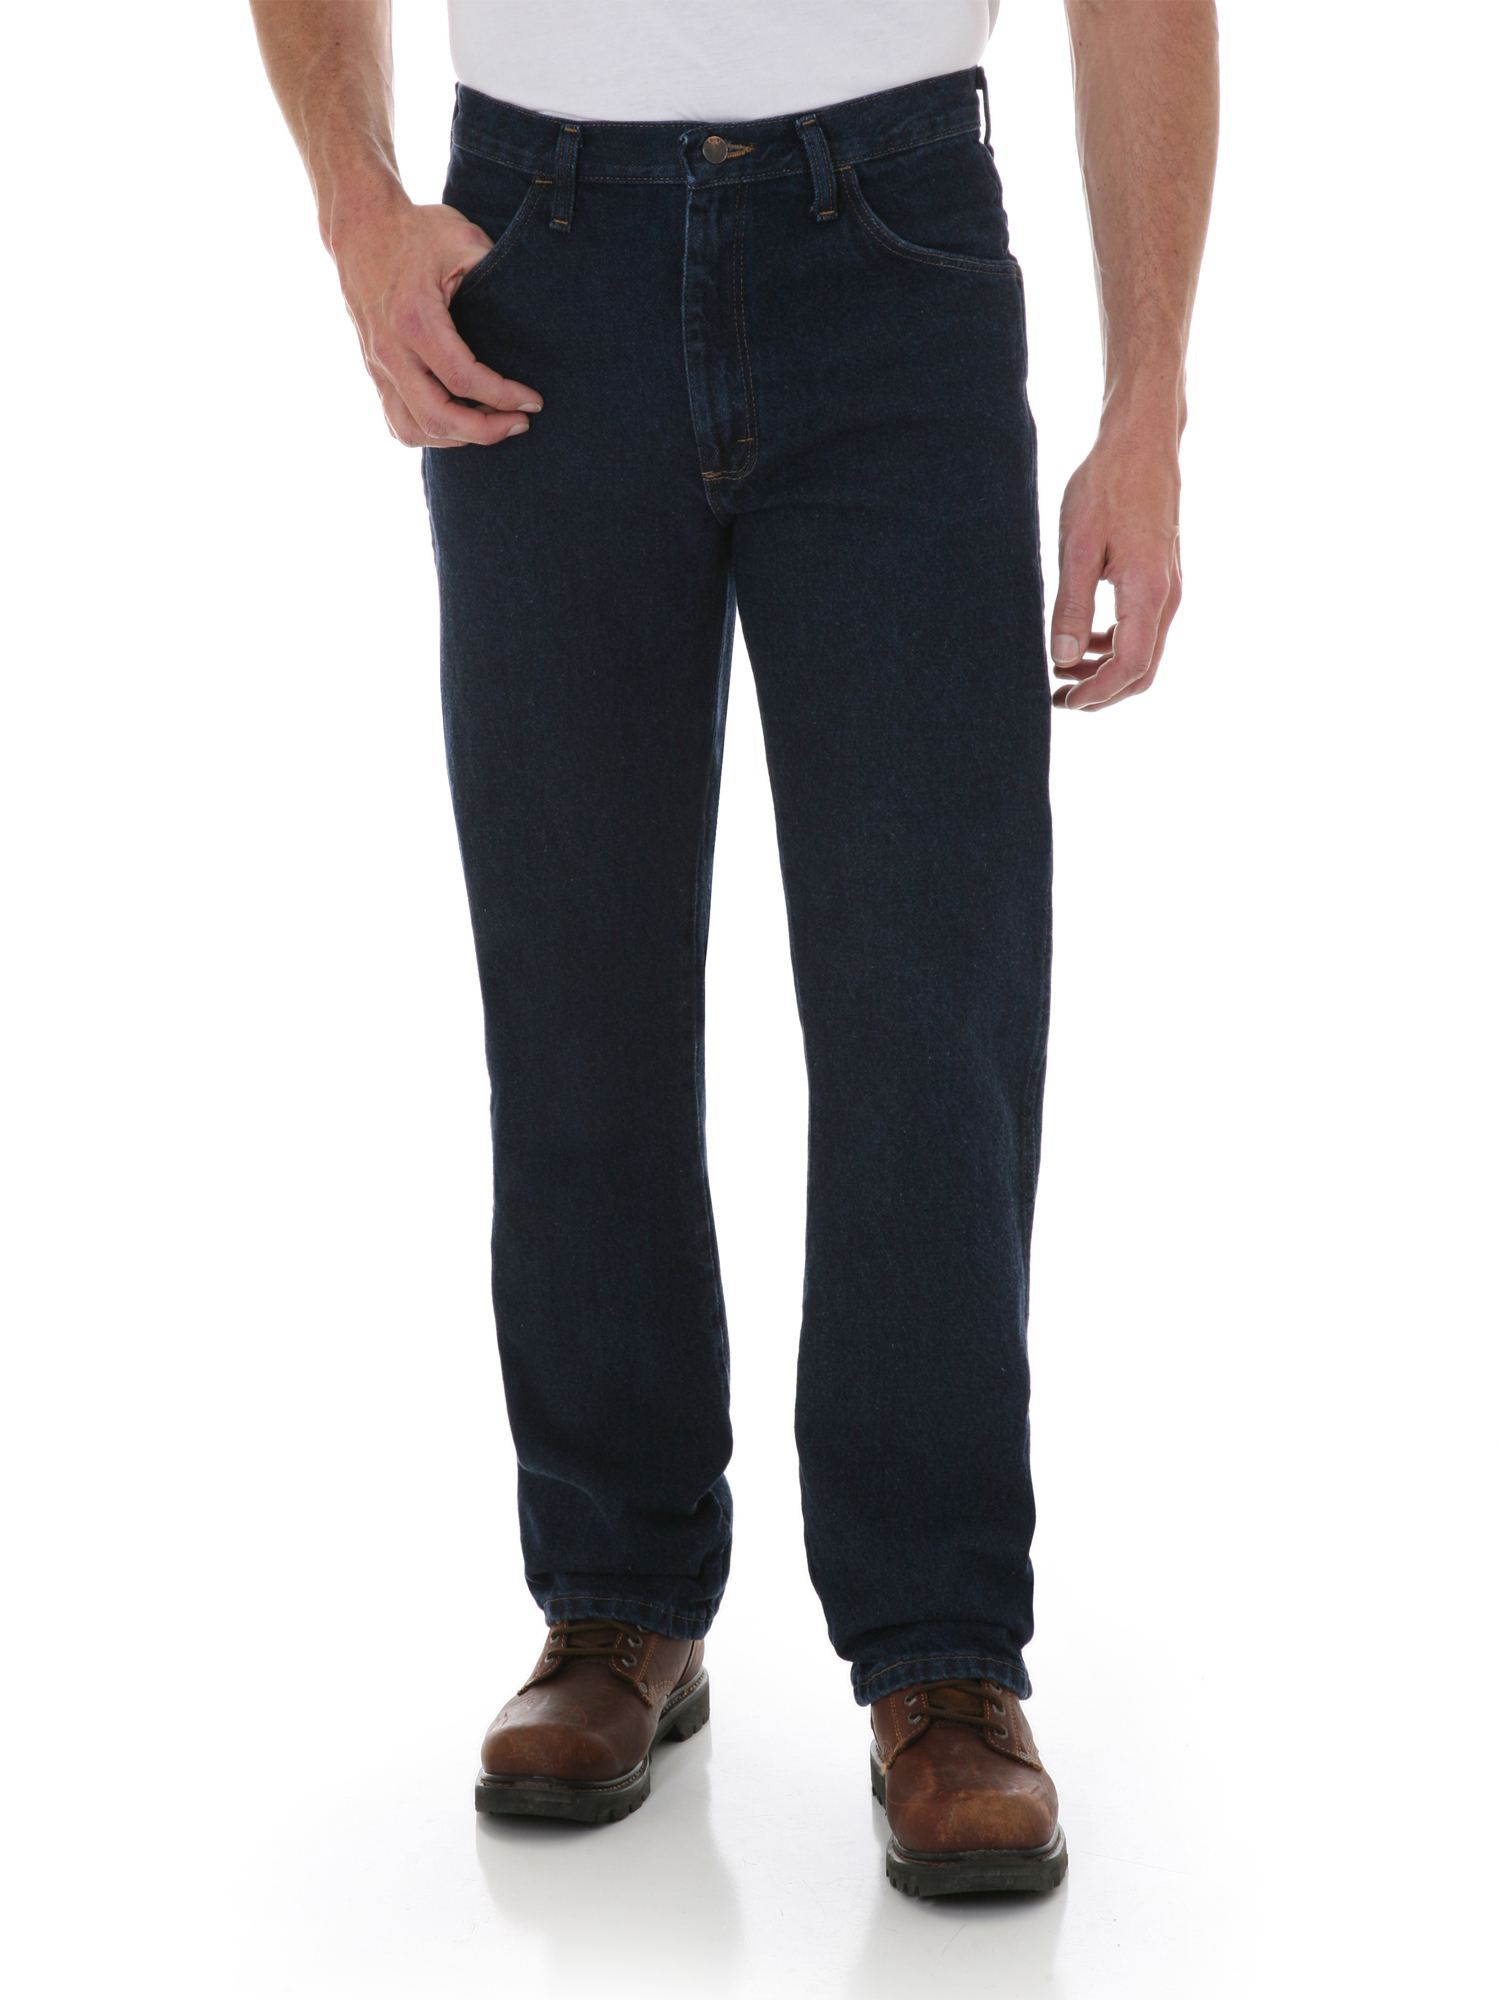 Wrangler Rustler Men's and Big Men's Regular Fit Boot Cut Cotton Jeans - image 1 of 5